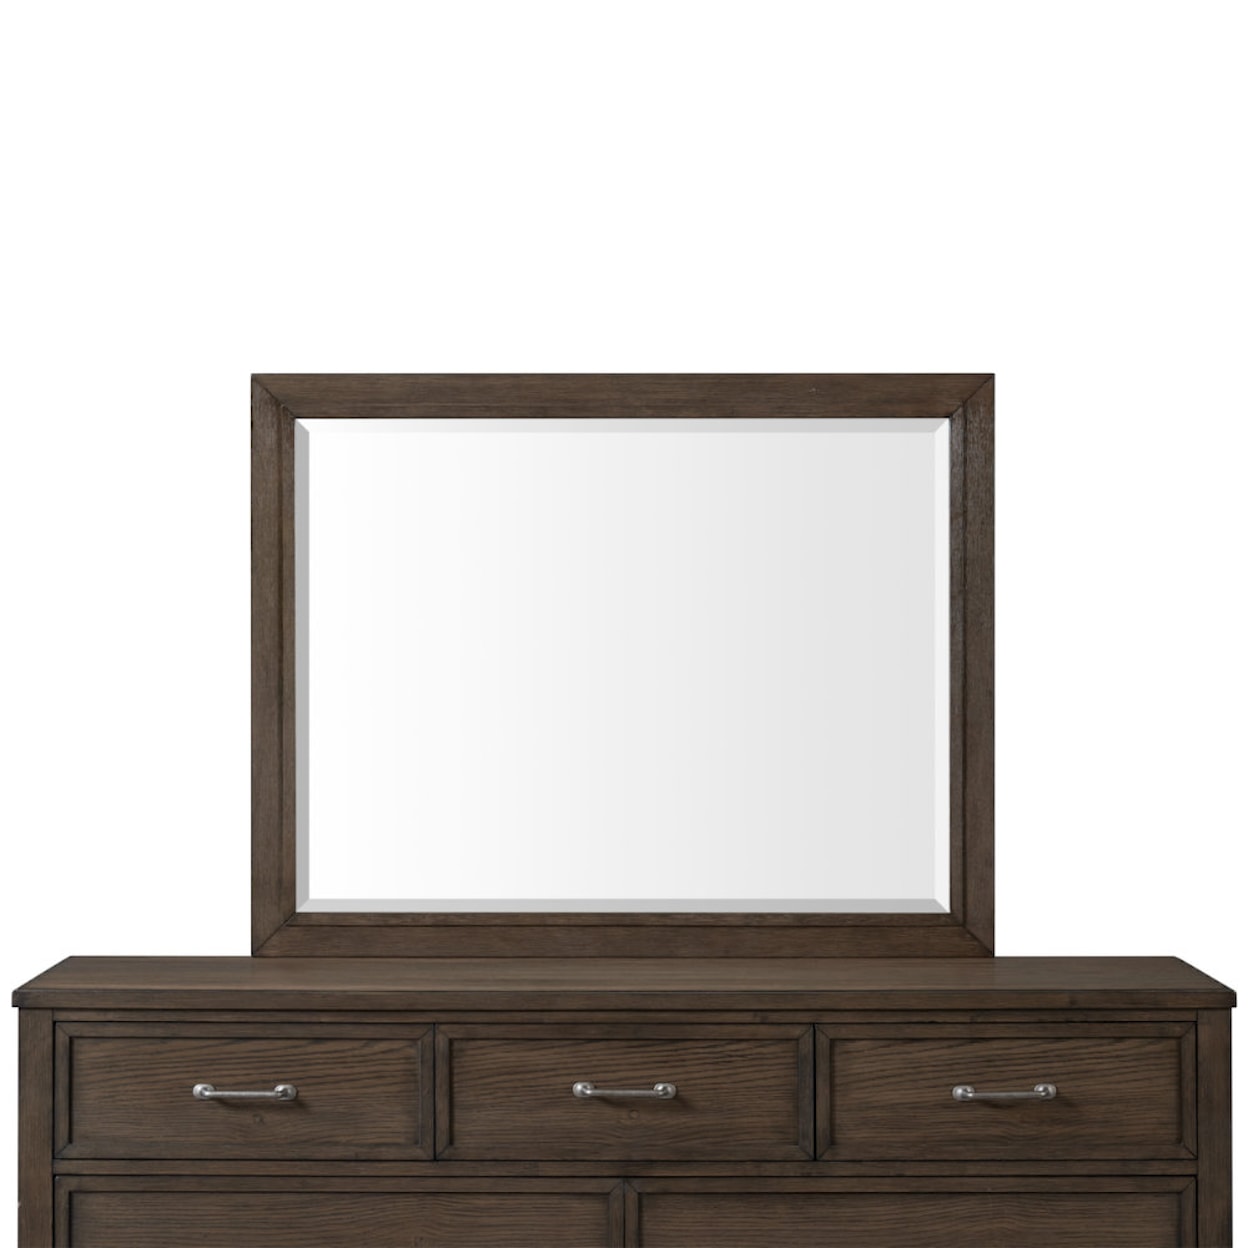 Intercon Preston Dresser Mirror